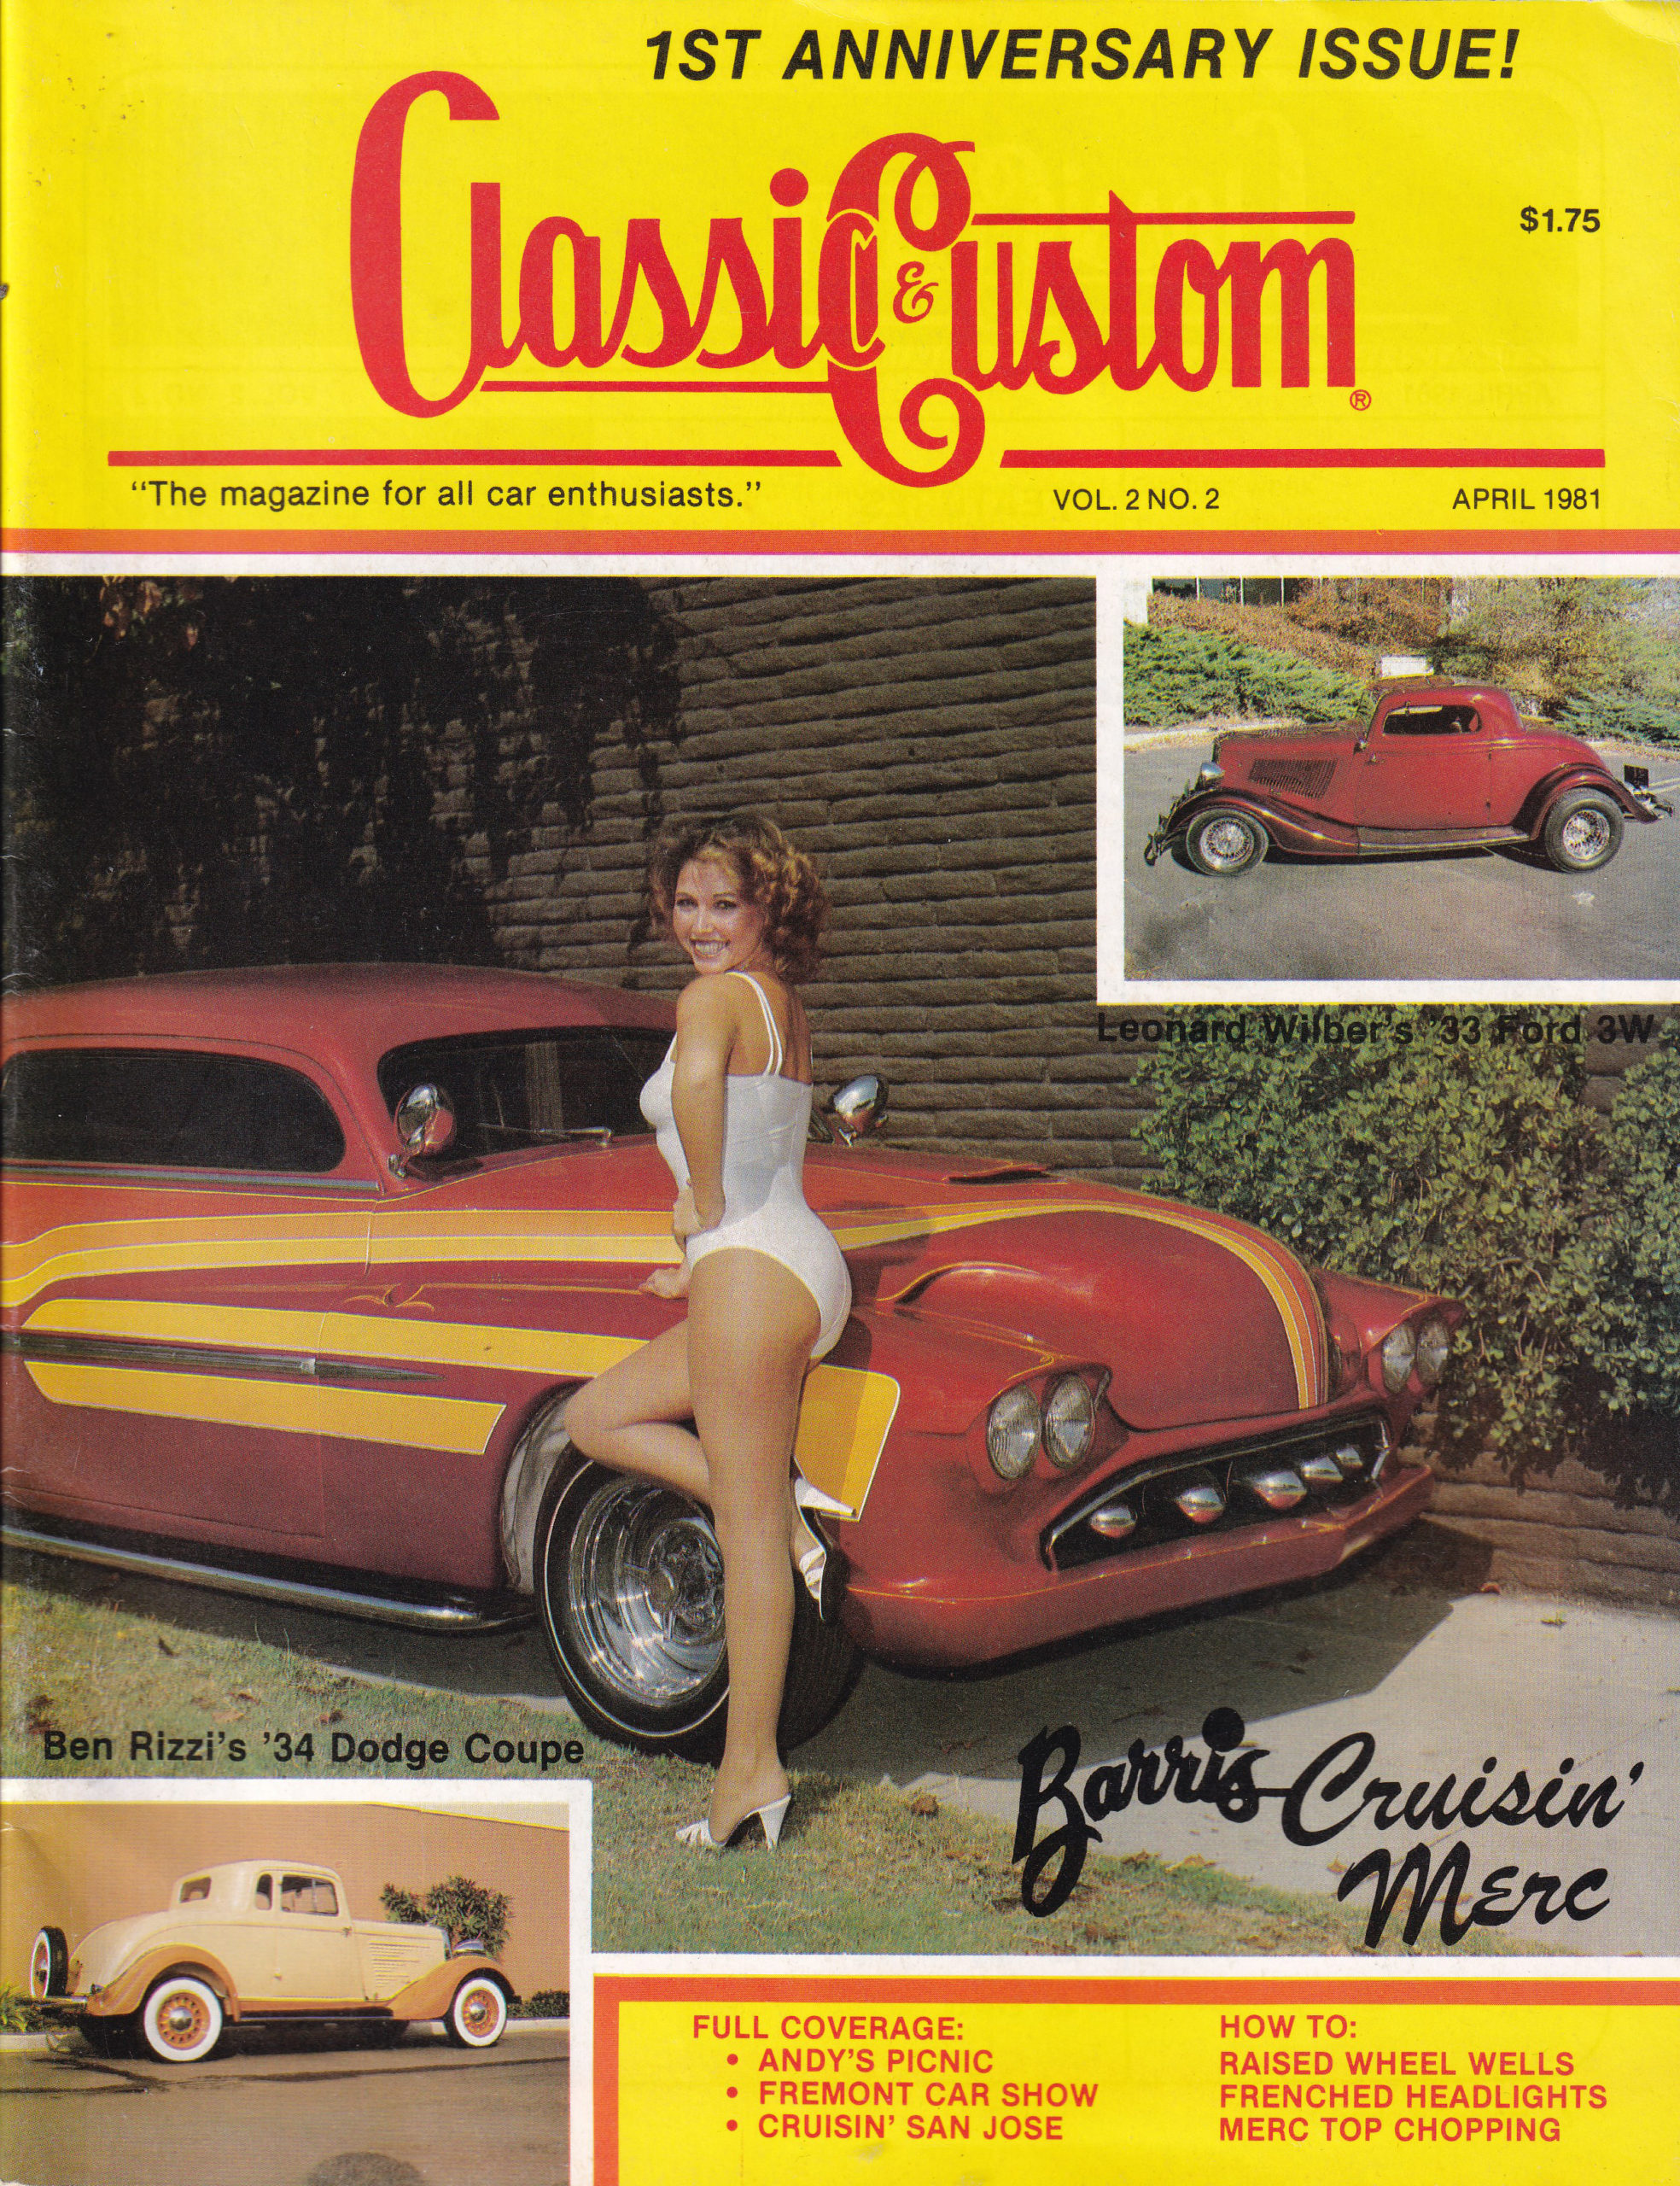 Cruisin' Merc Джорджа Барриса, скан обложки журнала Classic & Custom, Апрель 1981-ого.